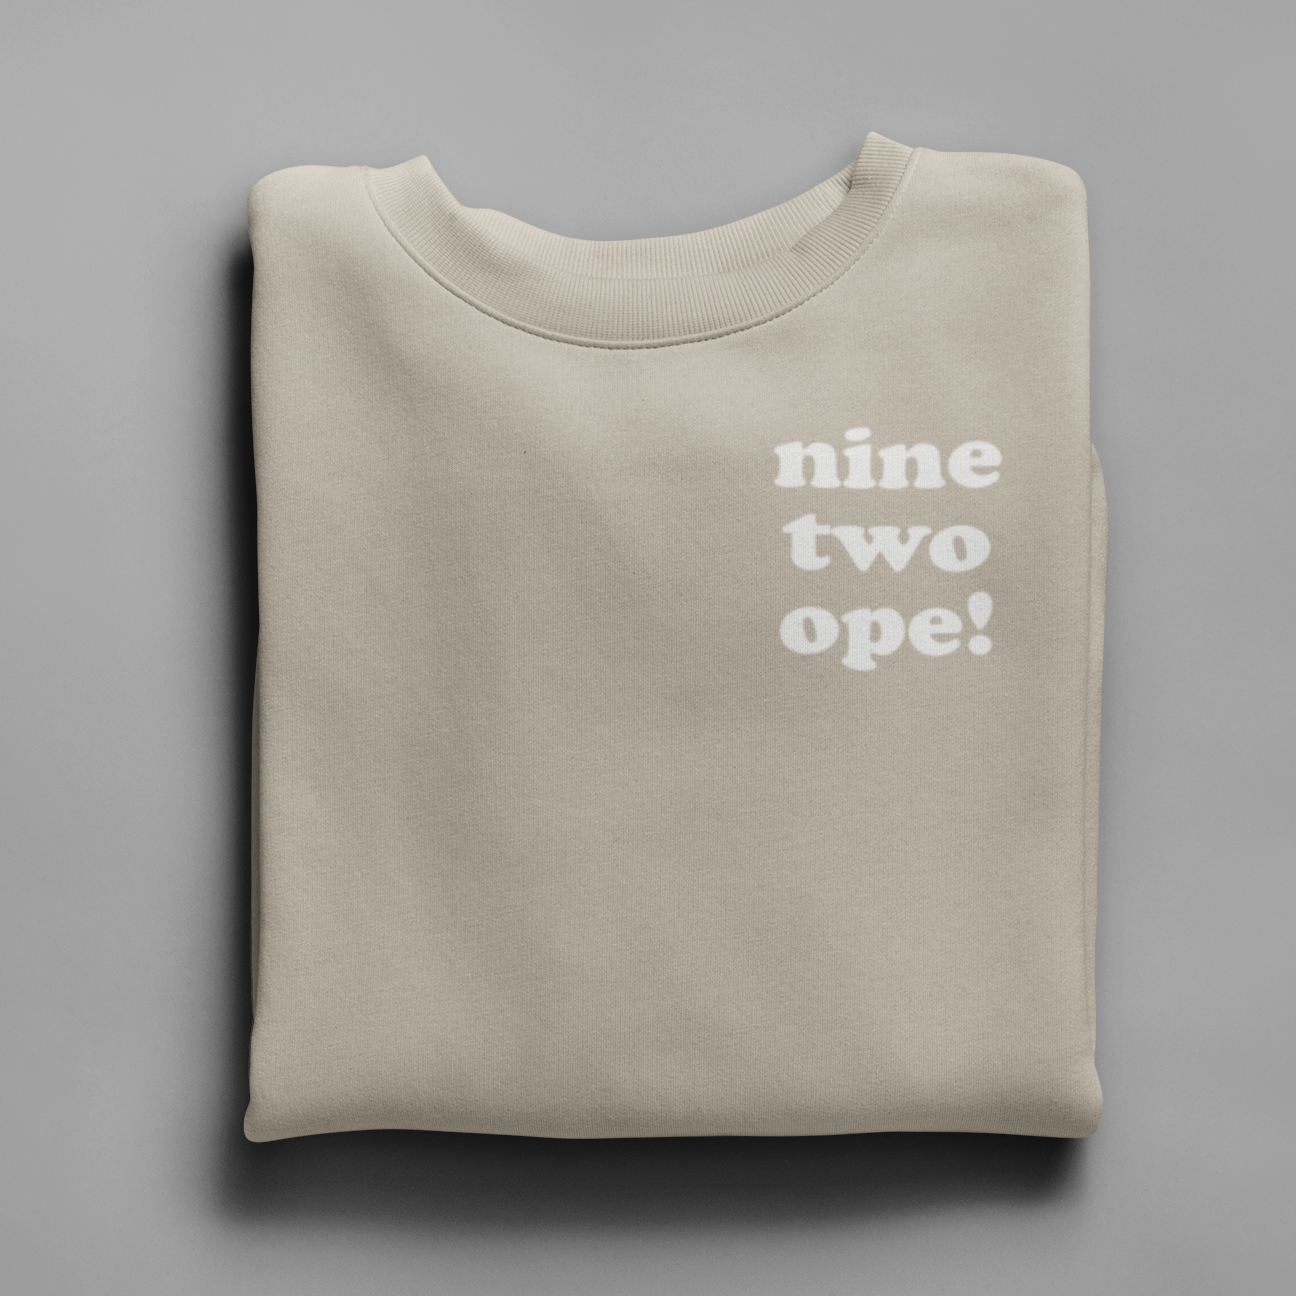 Sand Beige "nine two ope!" Area Code Crewneck Sweatshirt - 3D Puff Lettering